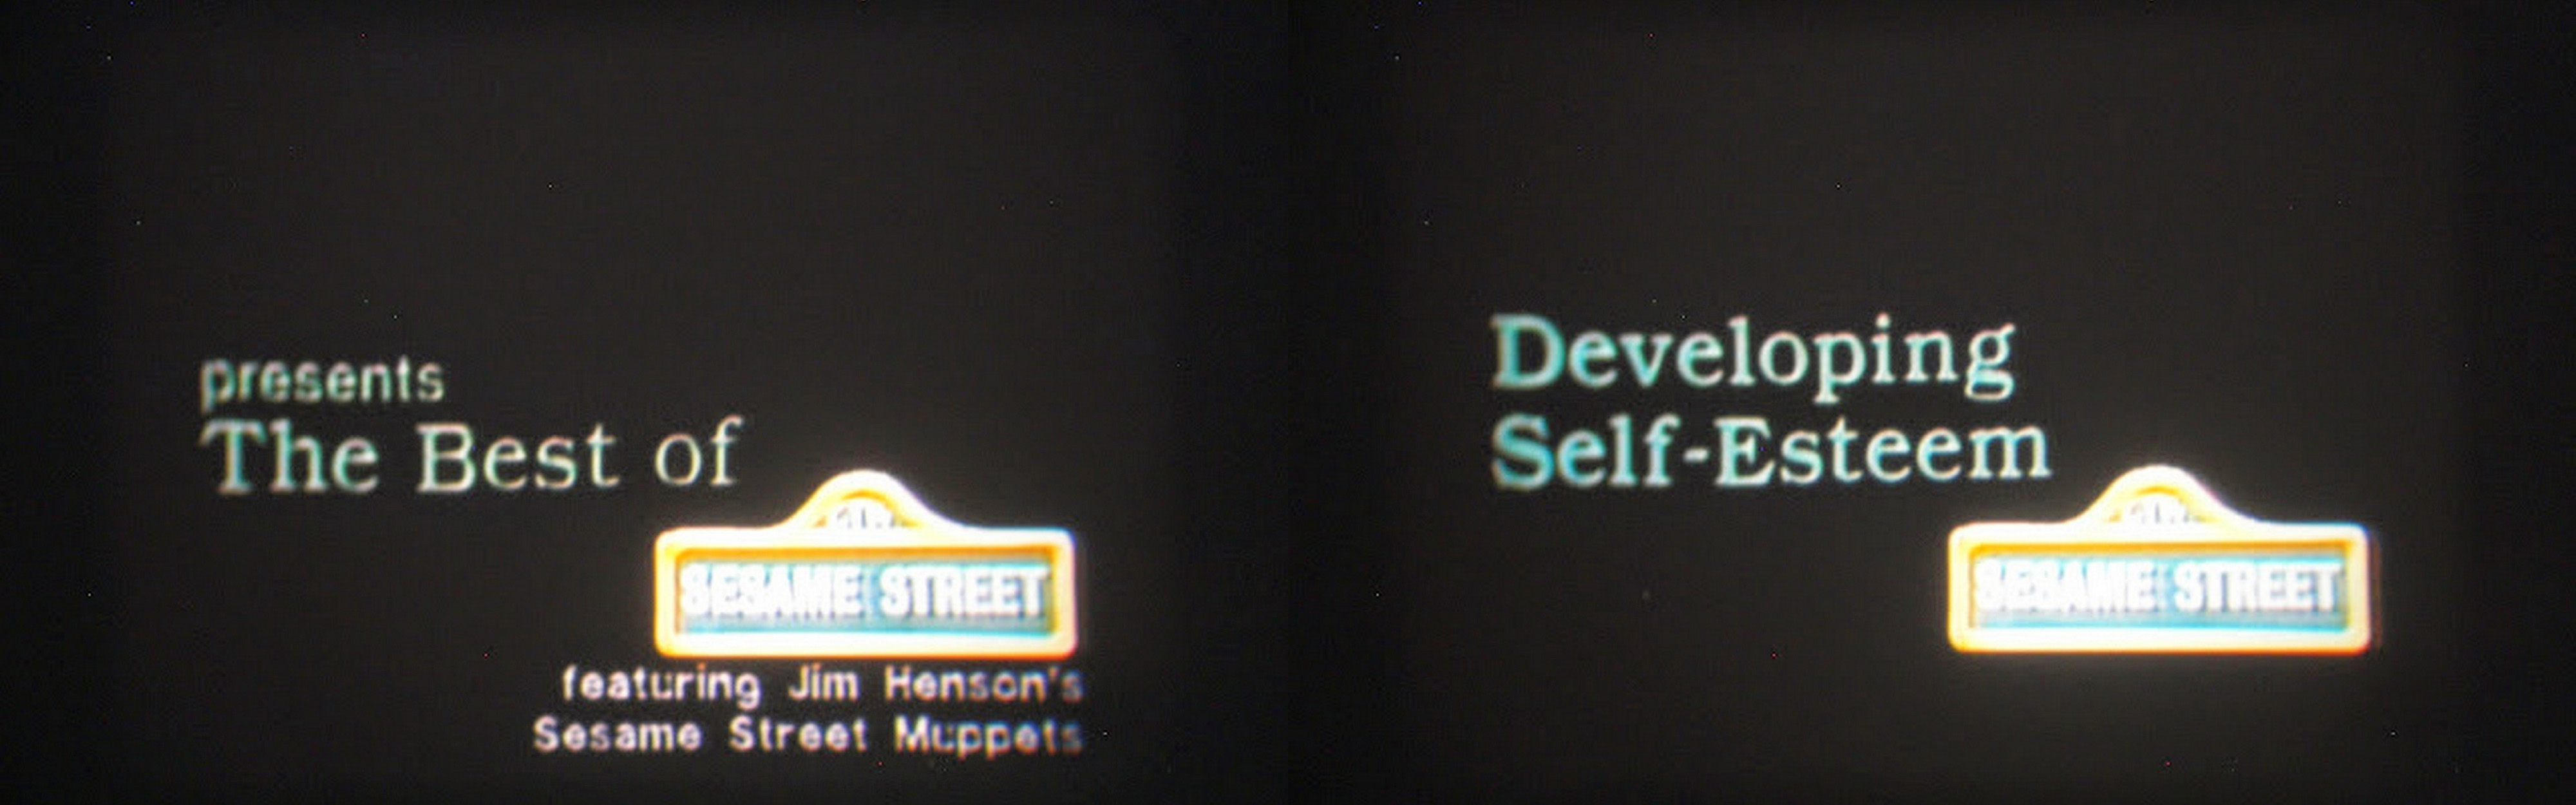 Developing Self-Esteem - Muppet Wiki4000 x 1250